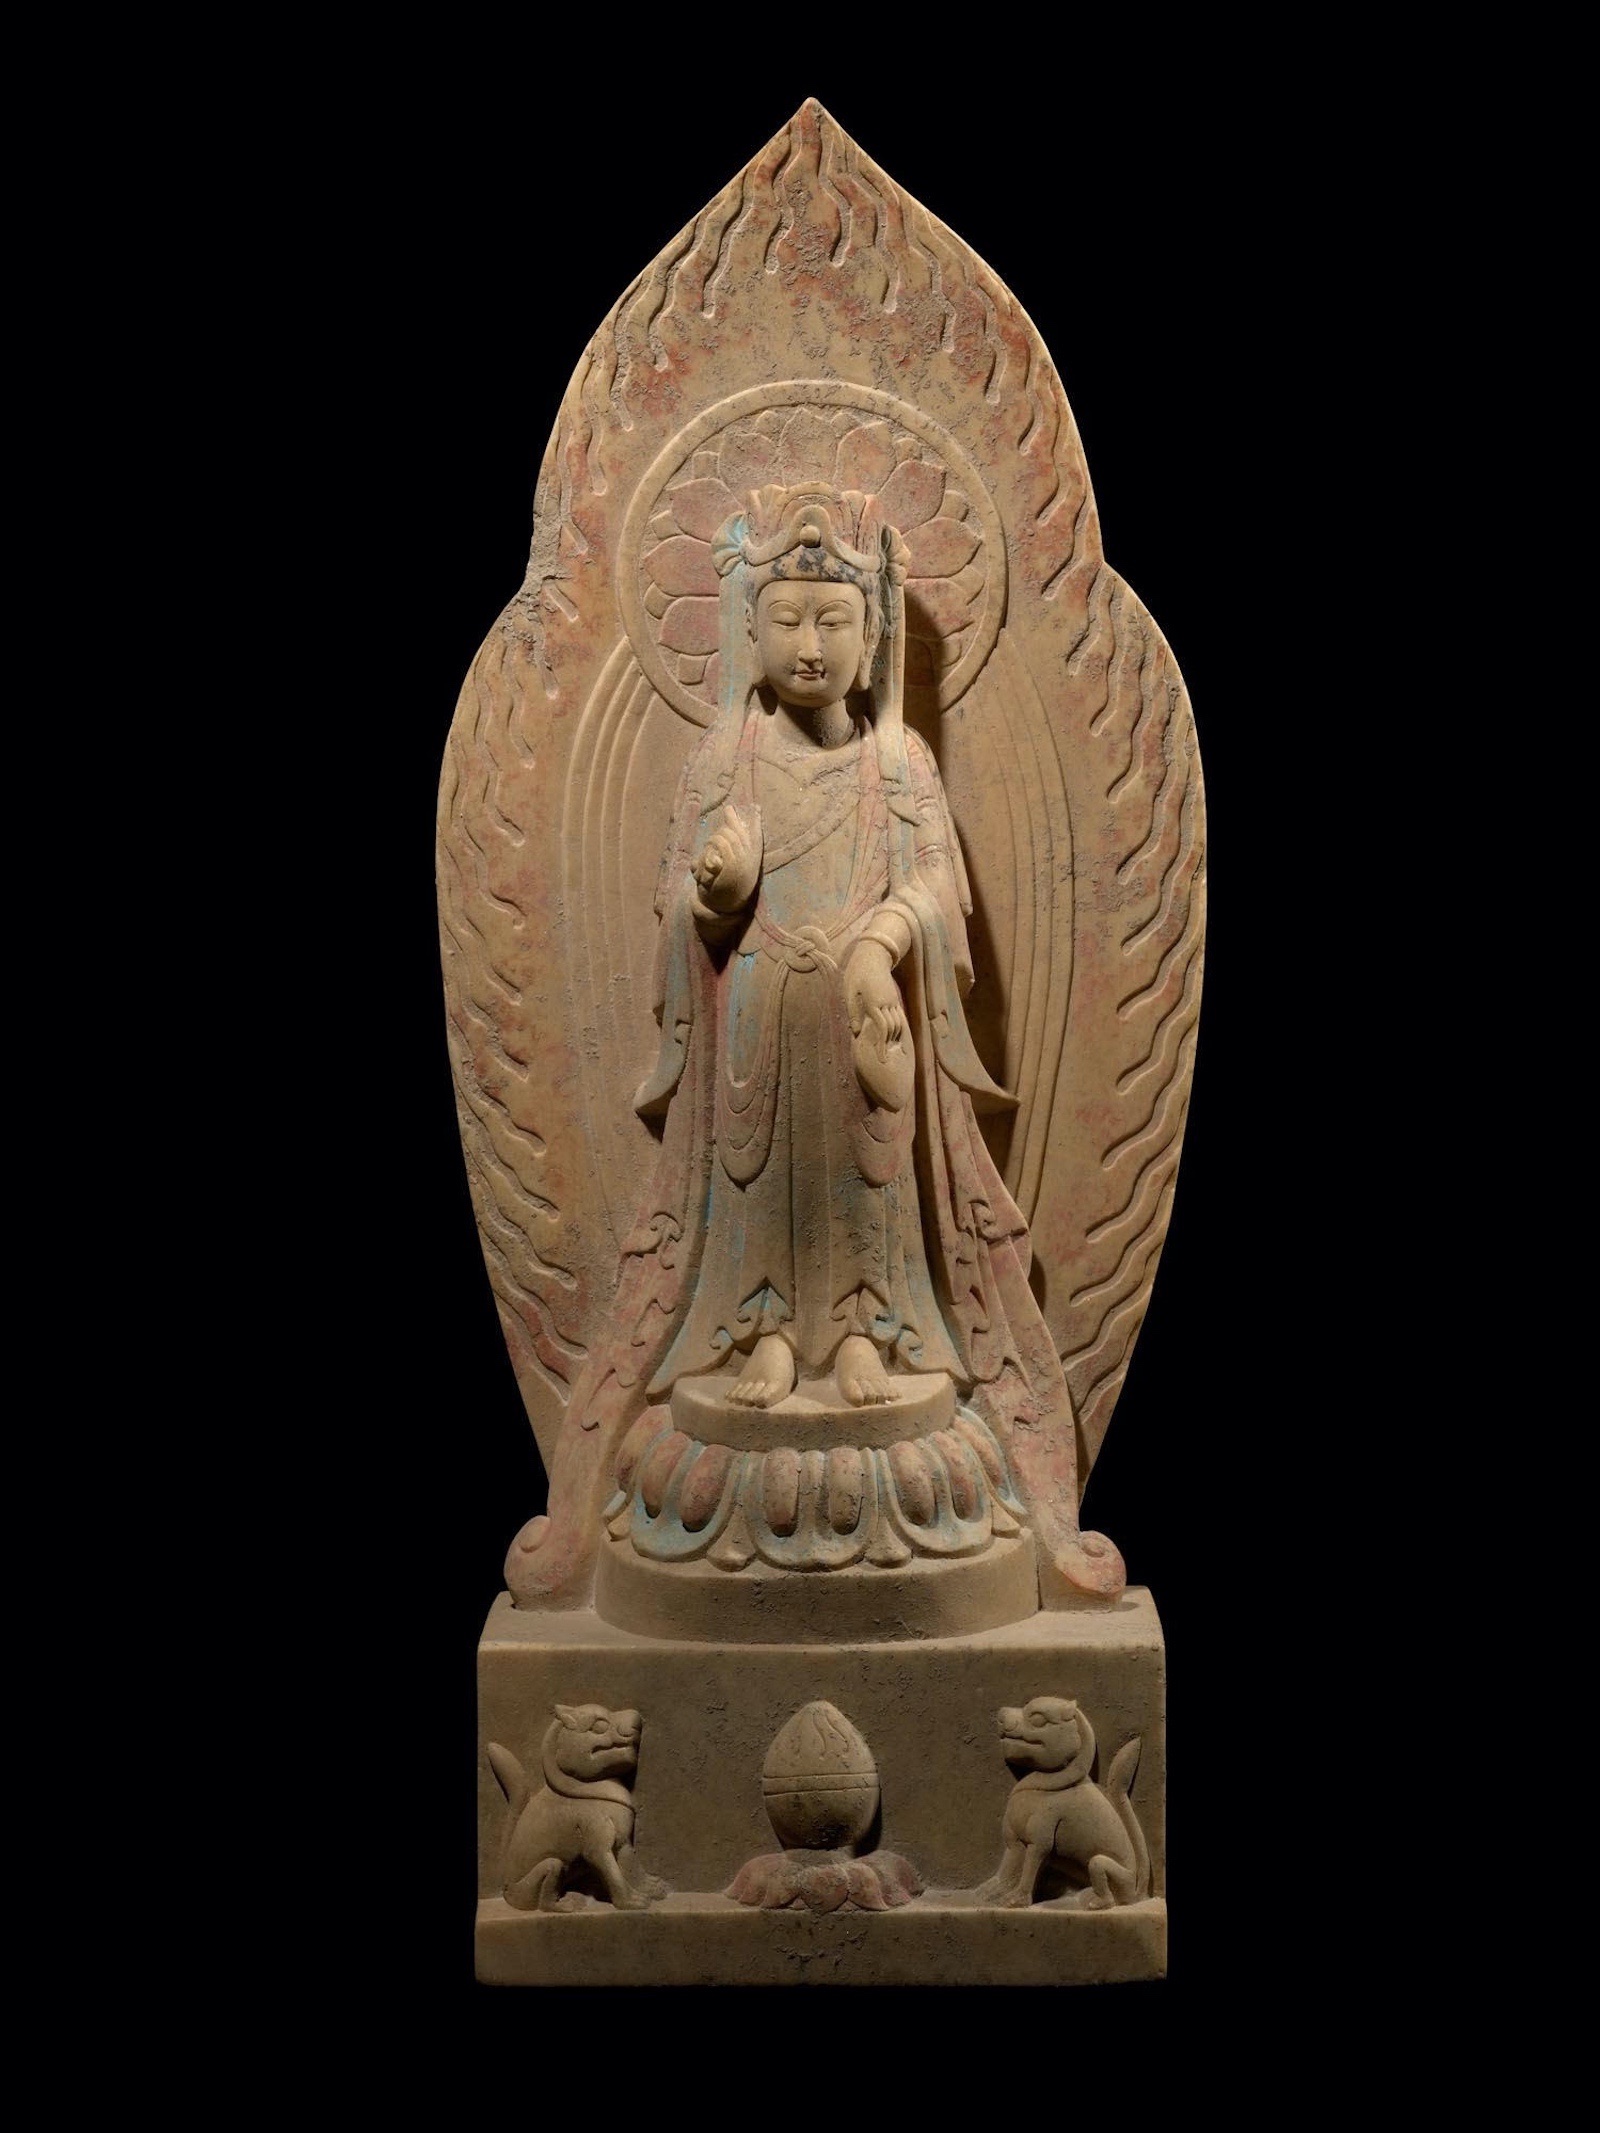 Stele of Bodhisattva